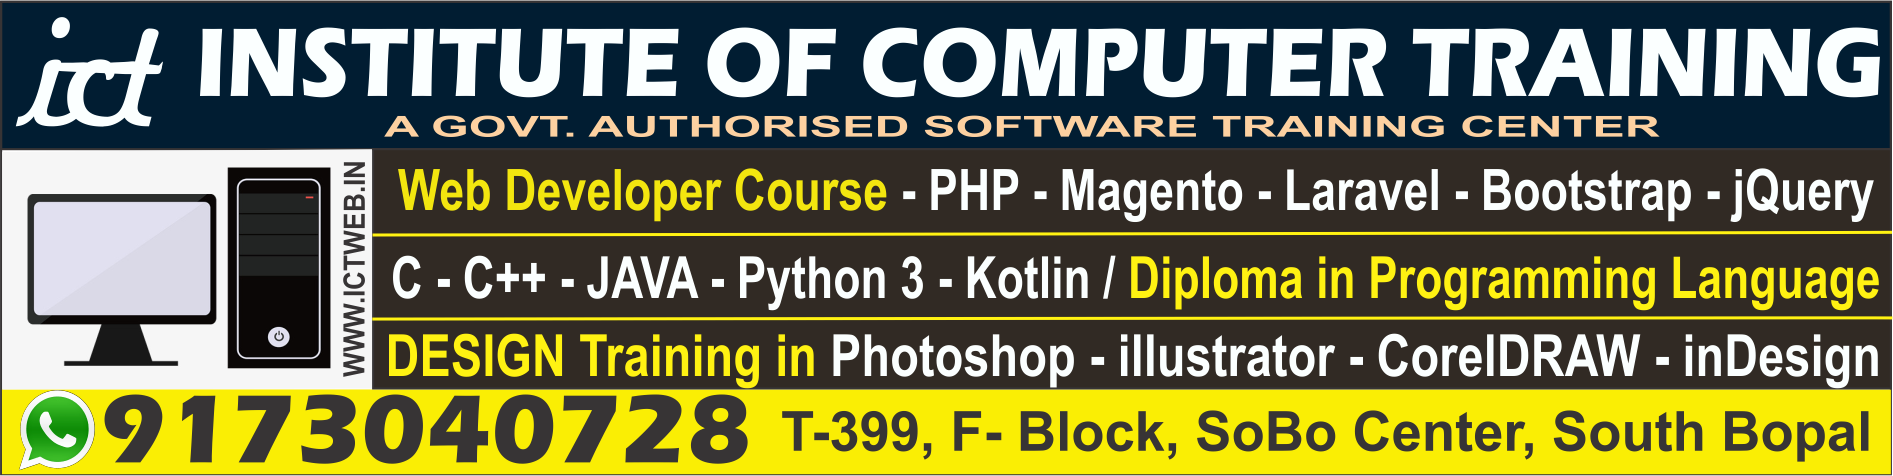 Institute of Computer Training|Education Consultants|Education